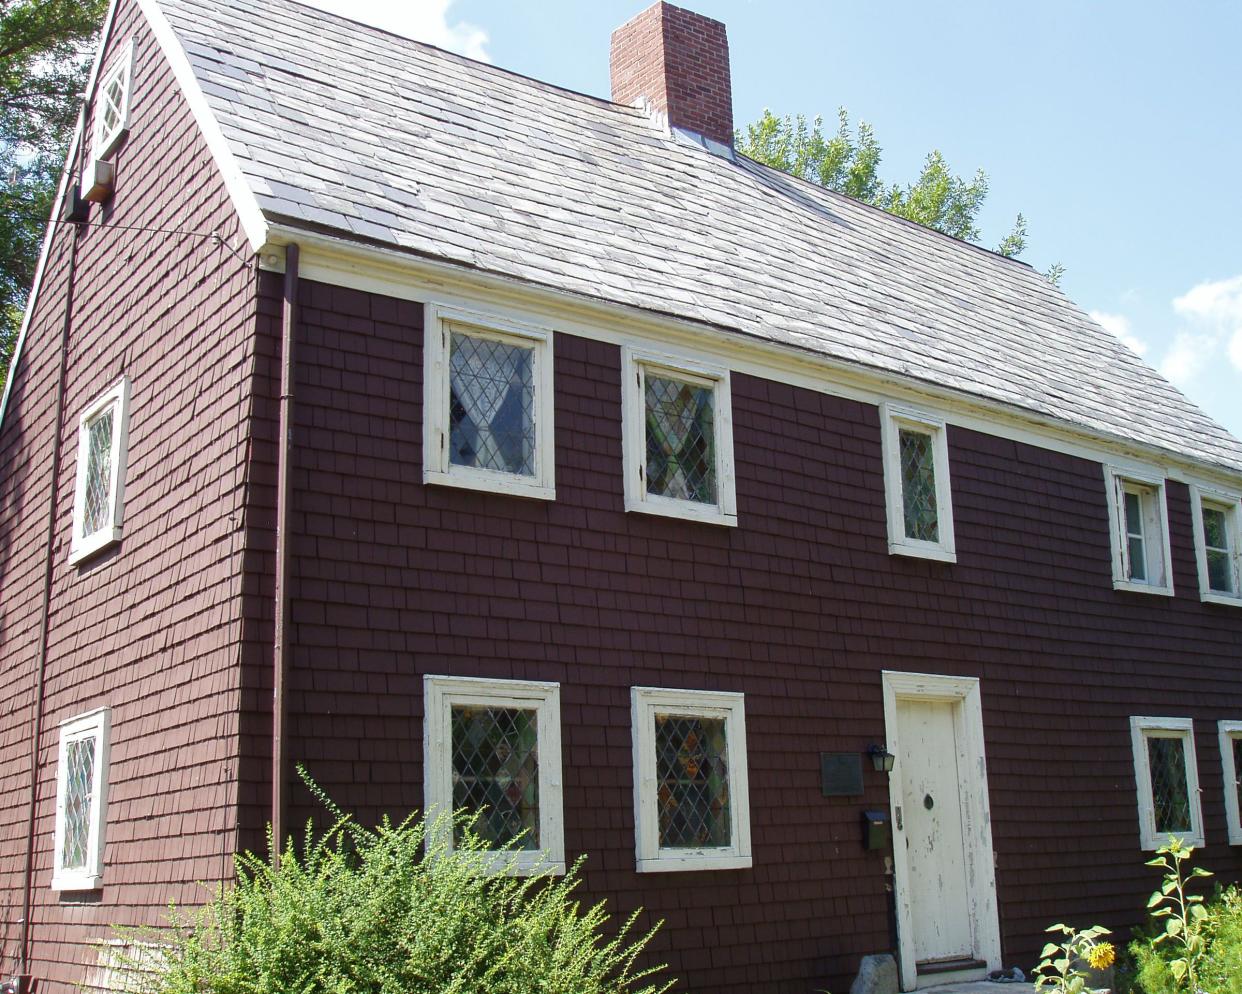 James Blake House, Dorchester, Massachusetts - exterior. Photograph taken by me, August 2005.